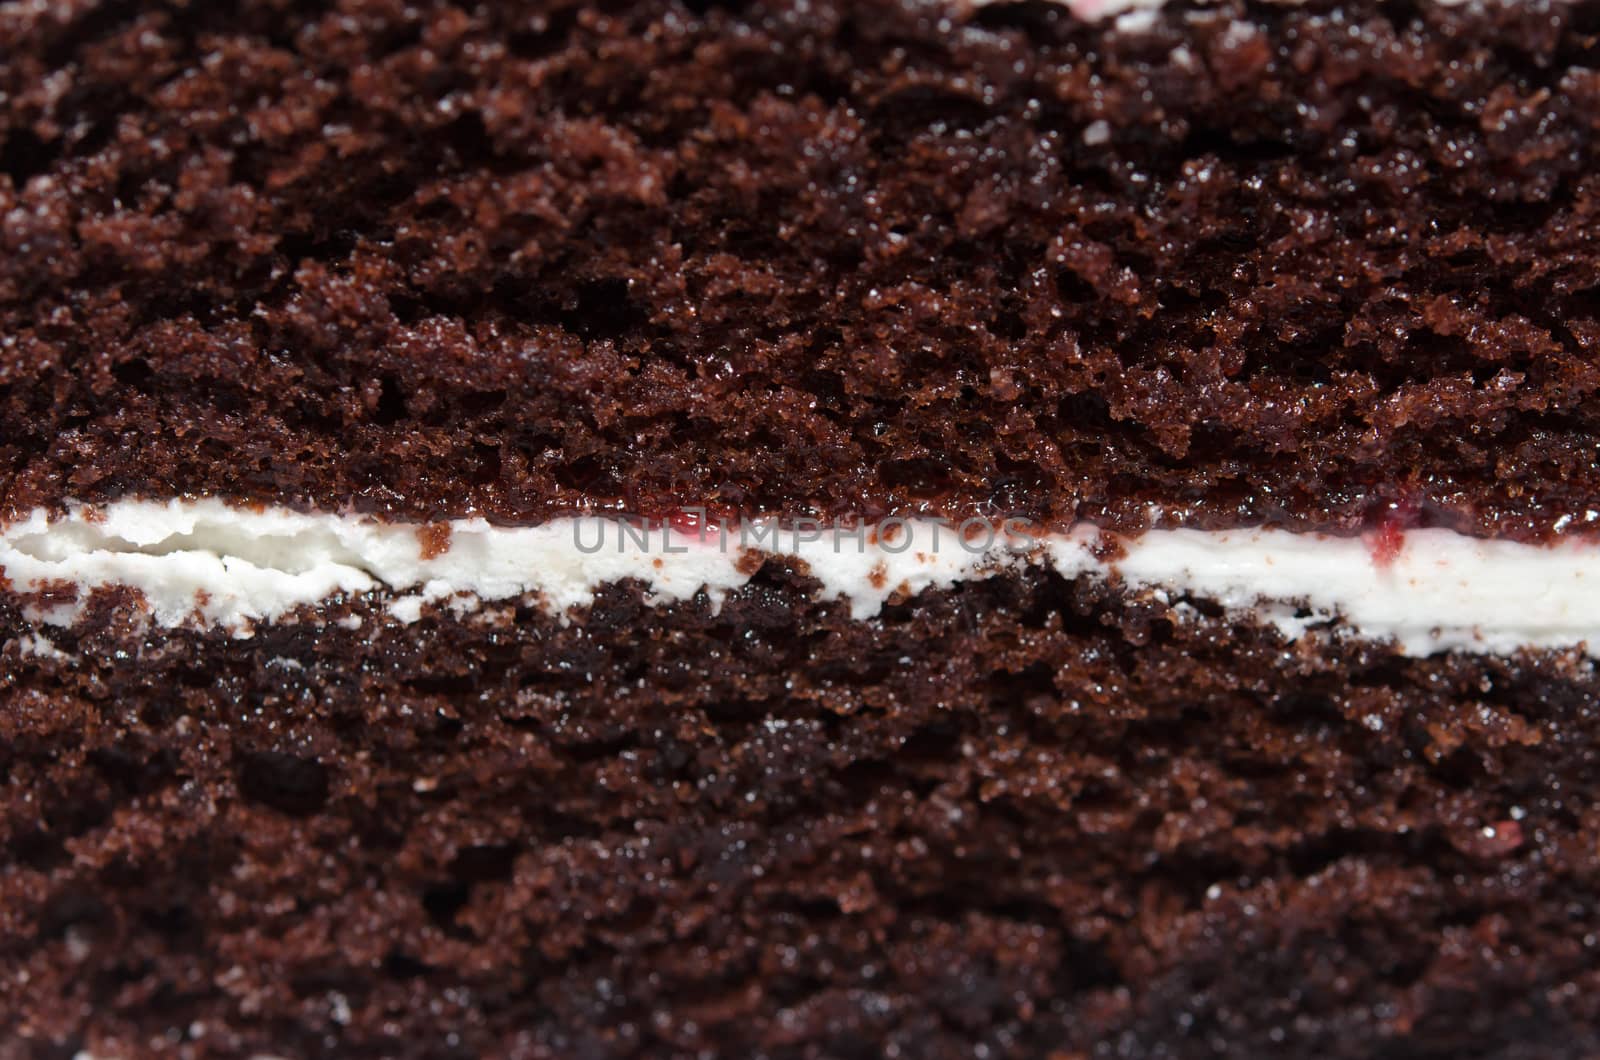 Photos of chocolate Cake of close-up shooting.